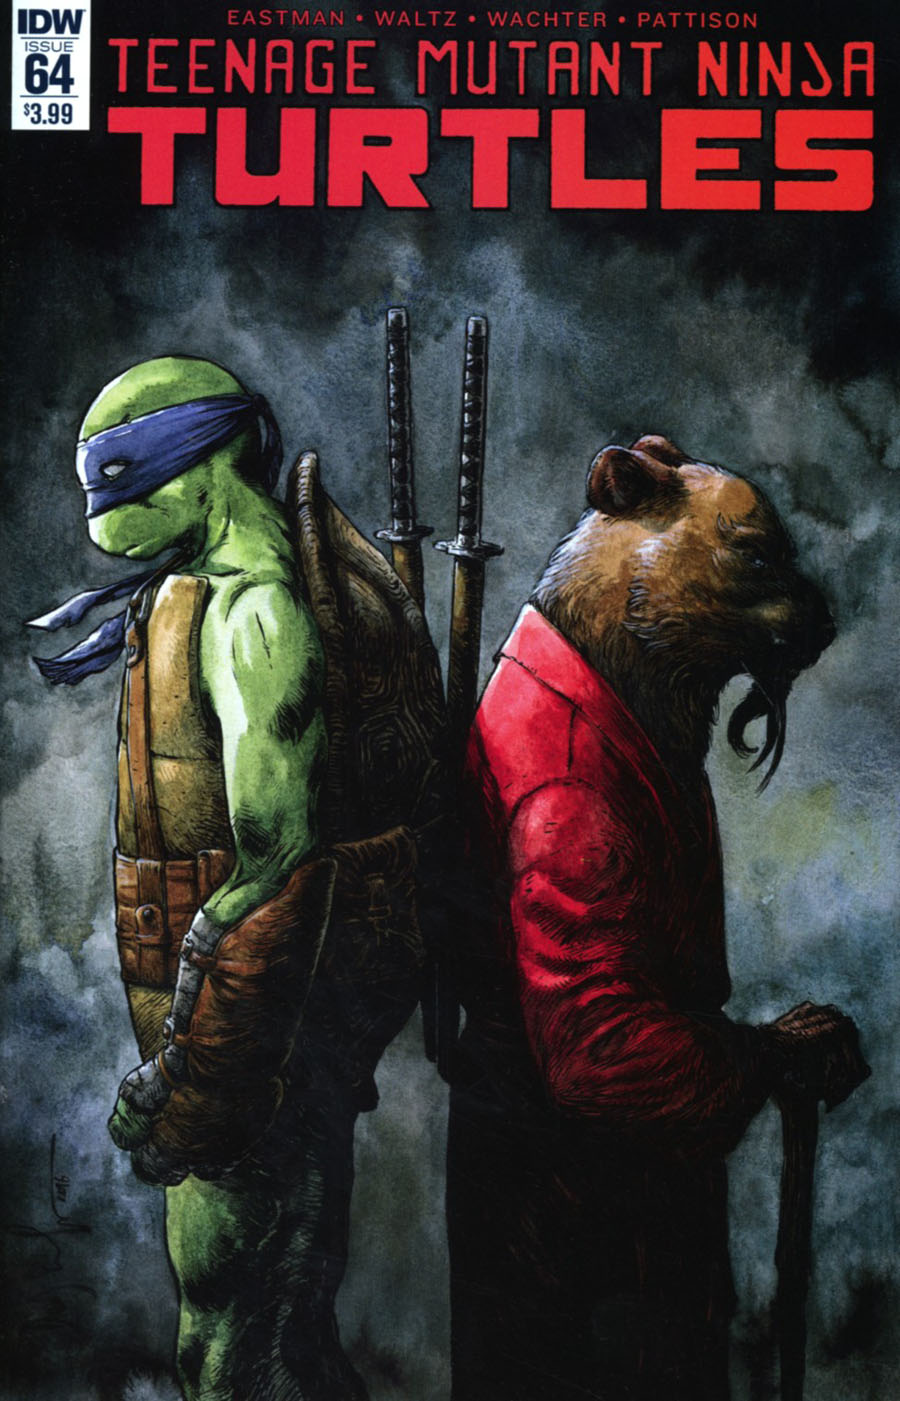 Teenage Mutant Ninja Turtles Vol 5 #64 Cover A Regular Dave Wachter Cover